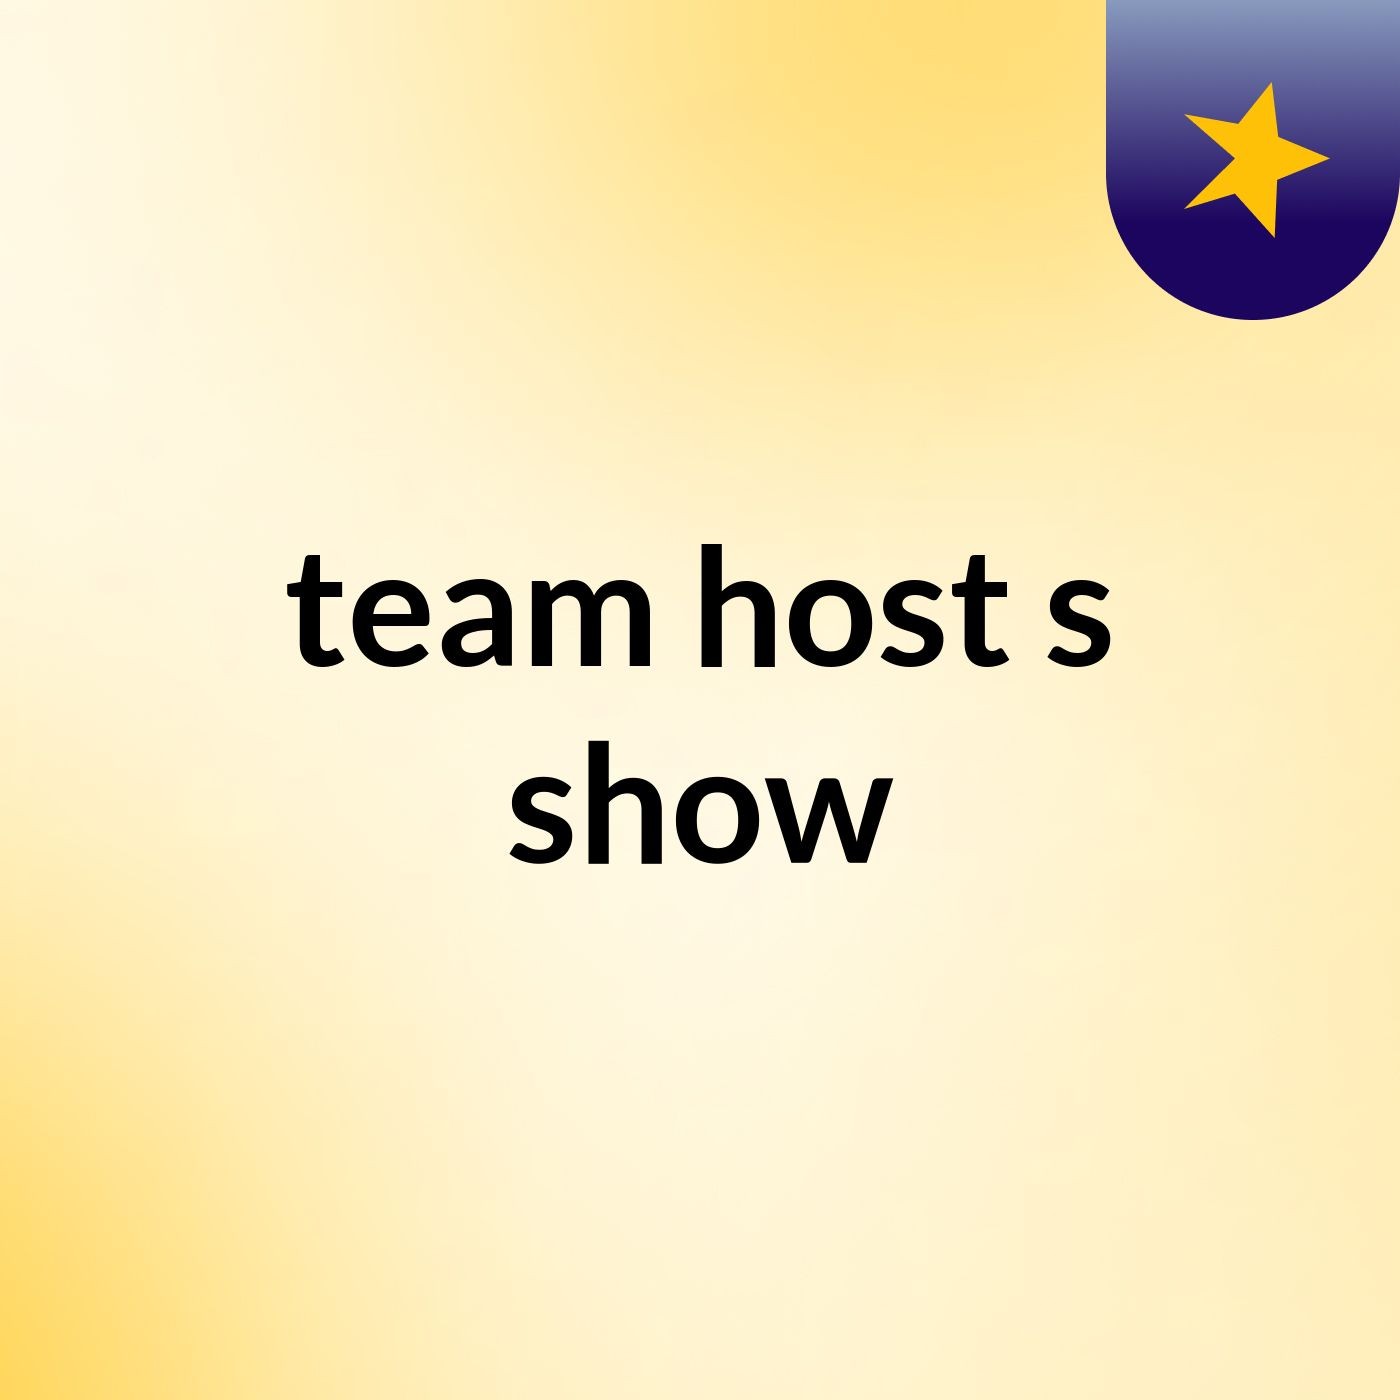 team host's show